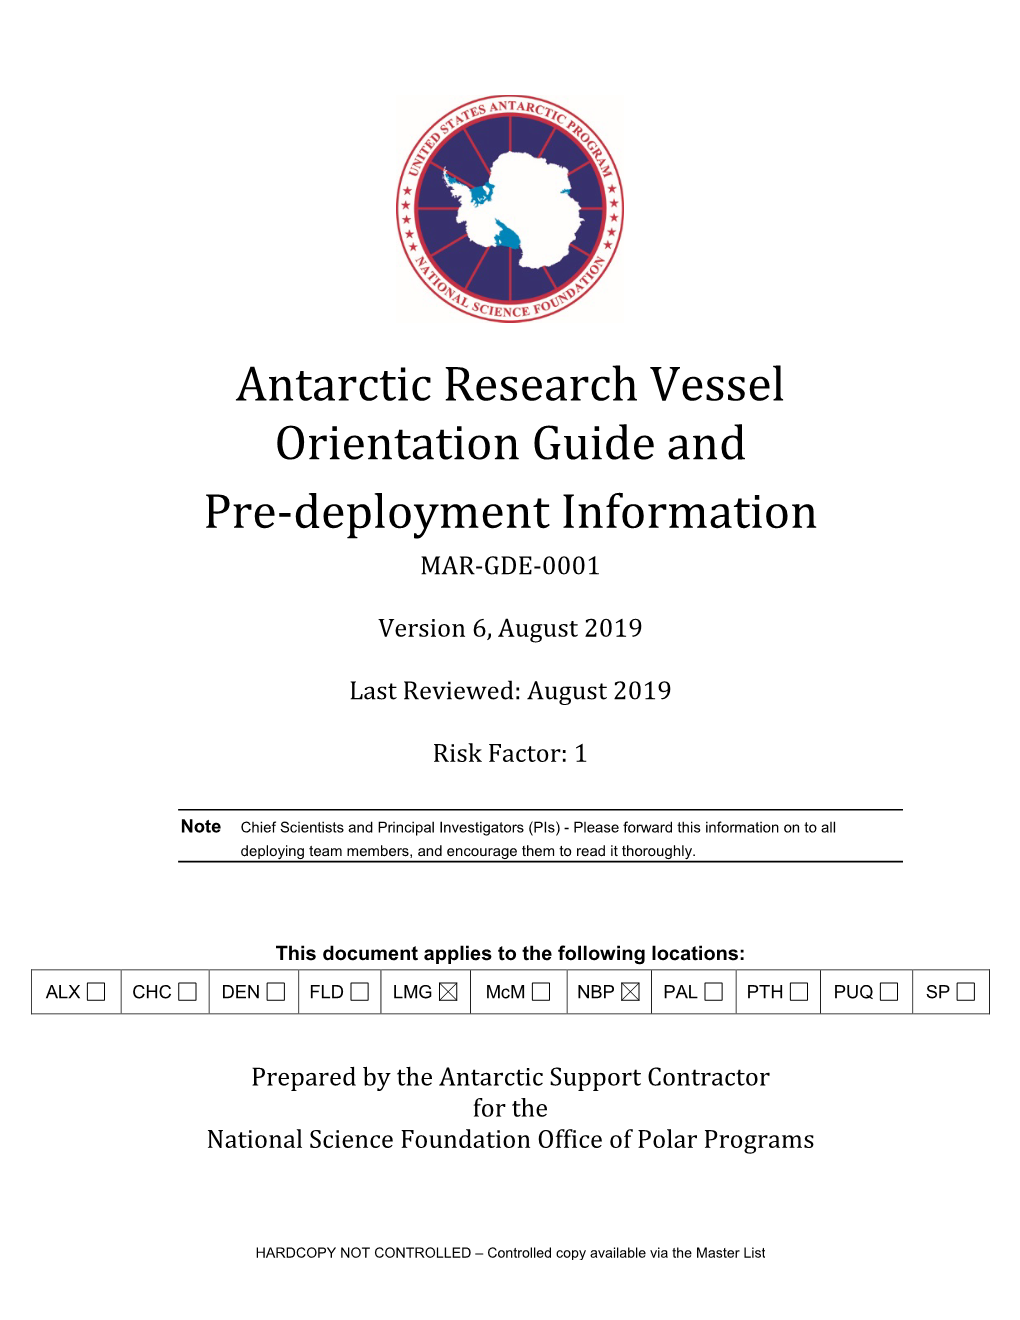 Vessel Orientation Guide and Pre-Deployment Information MAR-GDE-0001